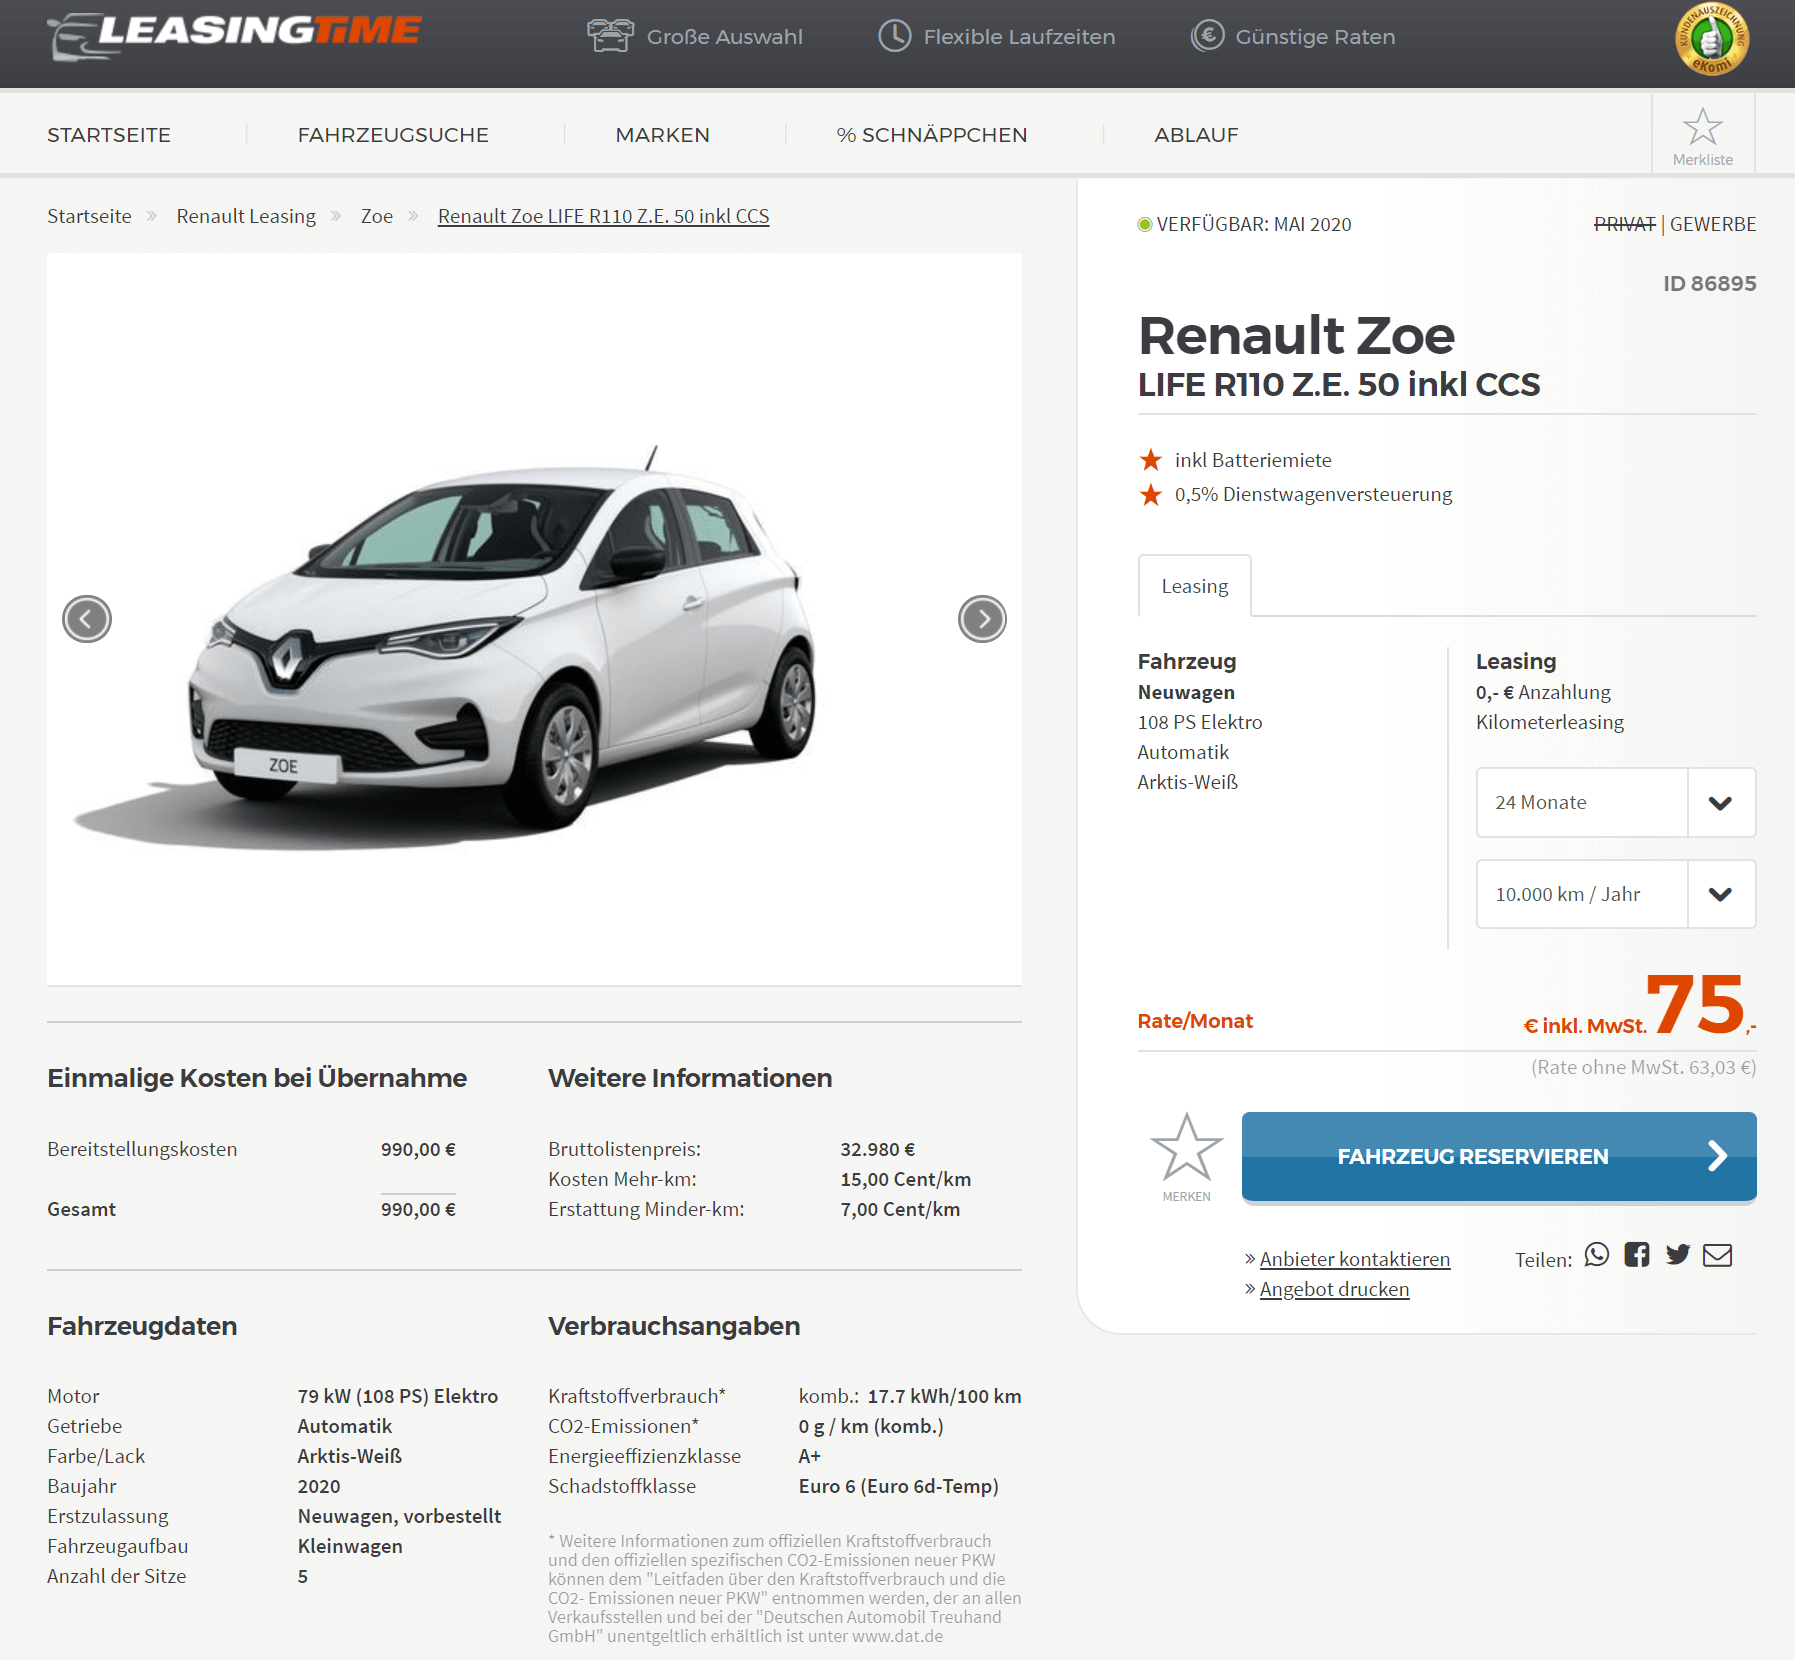 Renault Zoe Life R110/Z.E. 50 mit Batterie Leasing für 63,03 Euro